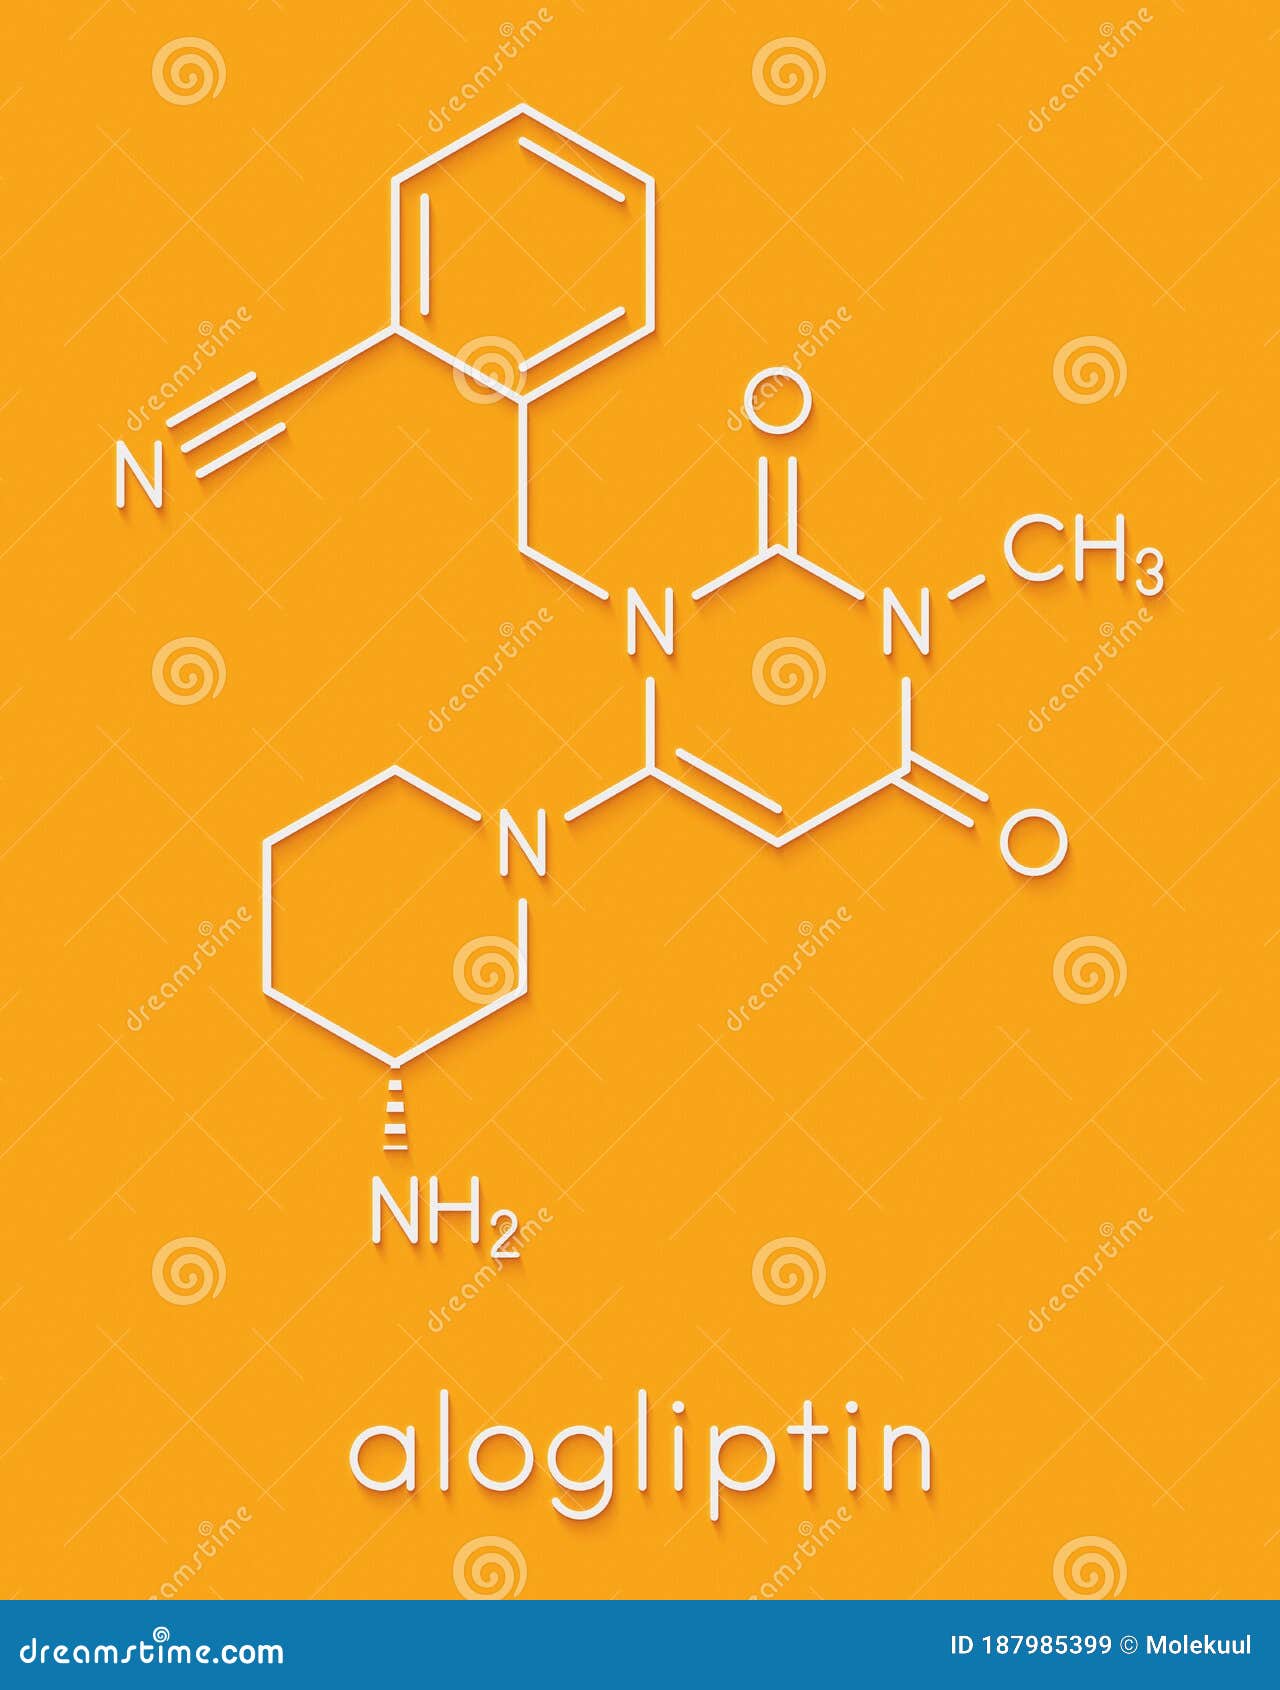 alogliptin diabetes drug molecule. belongs to dipeptidyl peptidase 4 dpp-4 or gliptin class of antidiabetic medicines. skeletal.